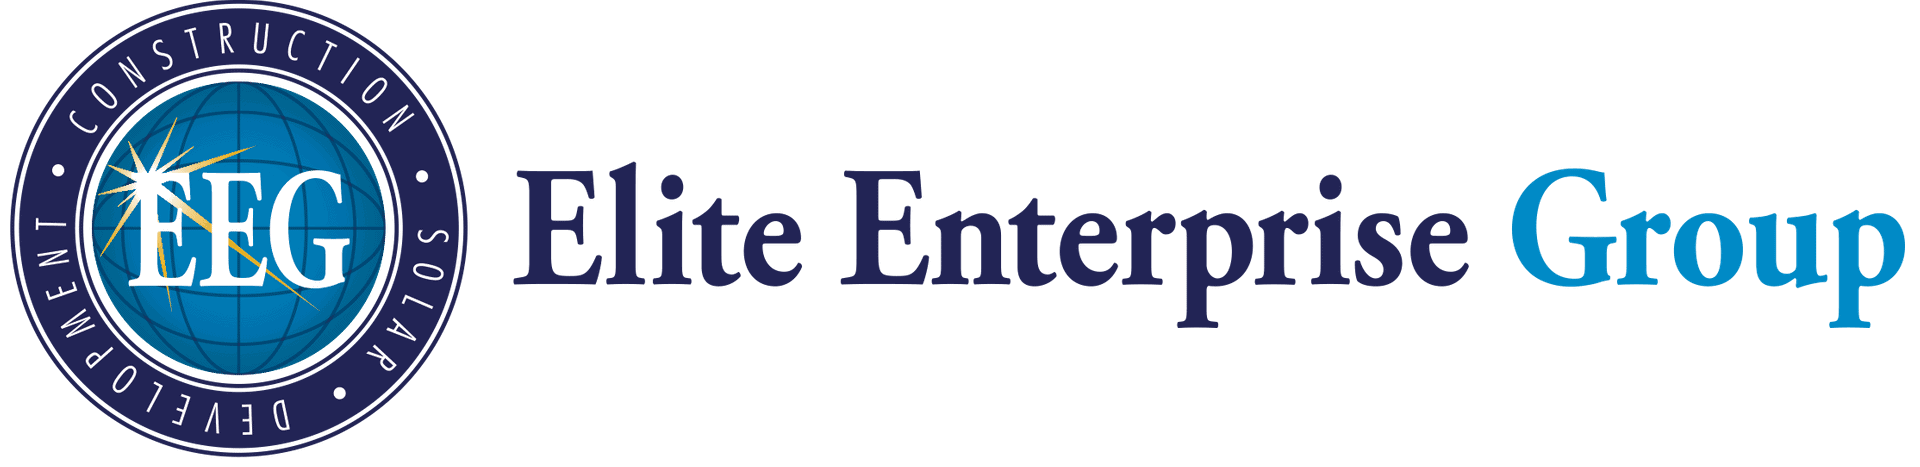 solar boise id Elite Enterprise Group (EEG)